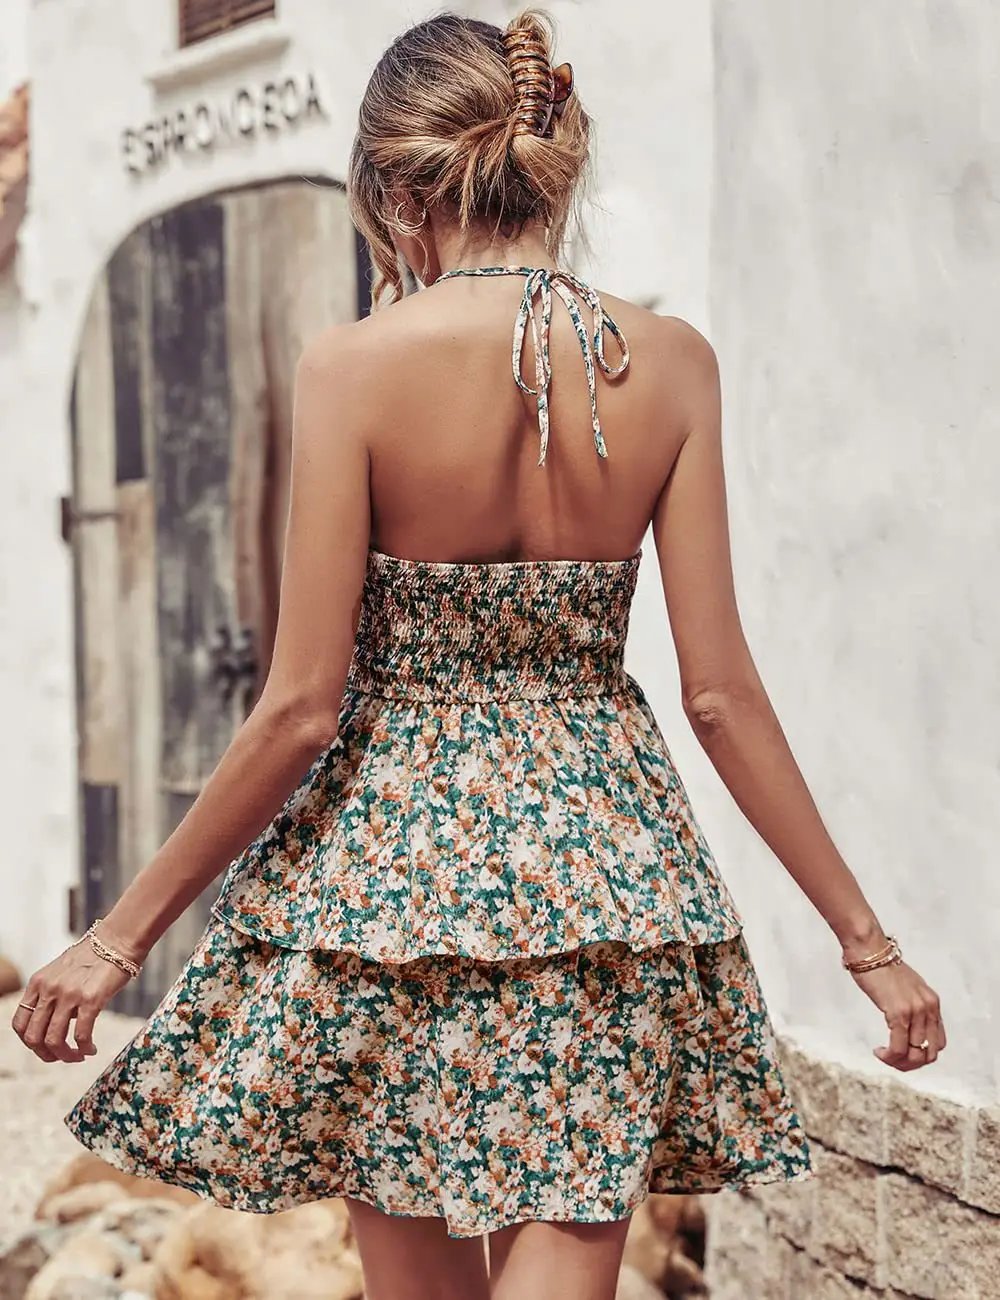 Summer Printed Halter Dress Fashion Backless Ruffled